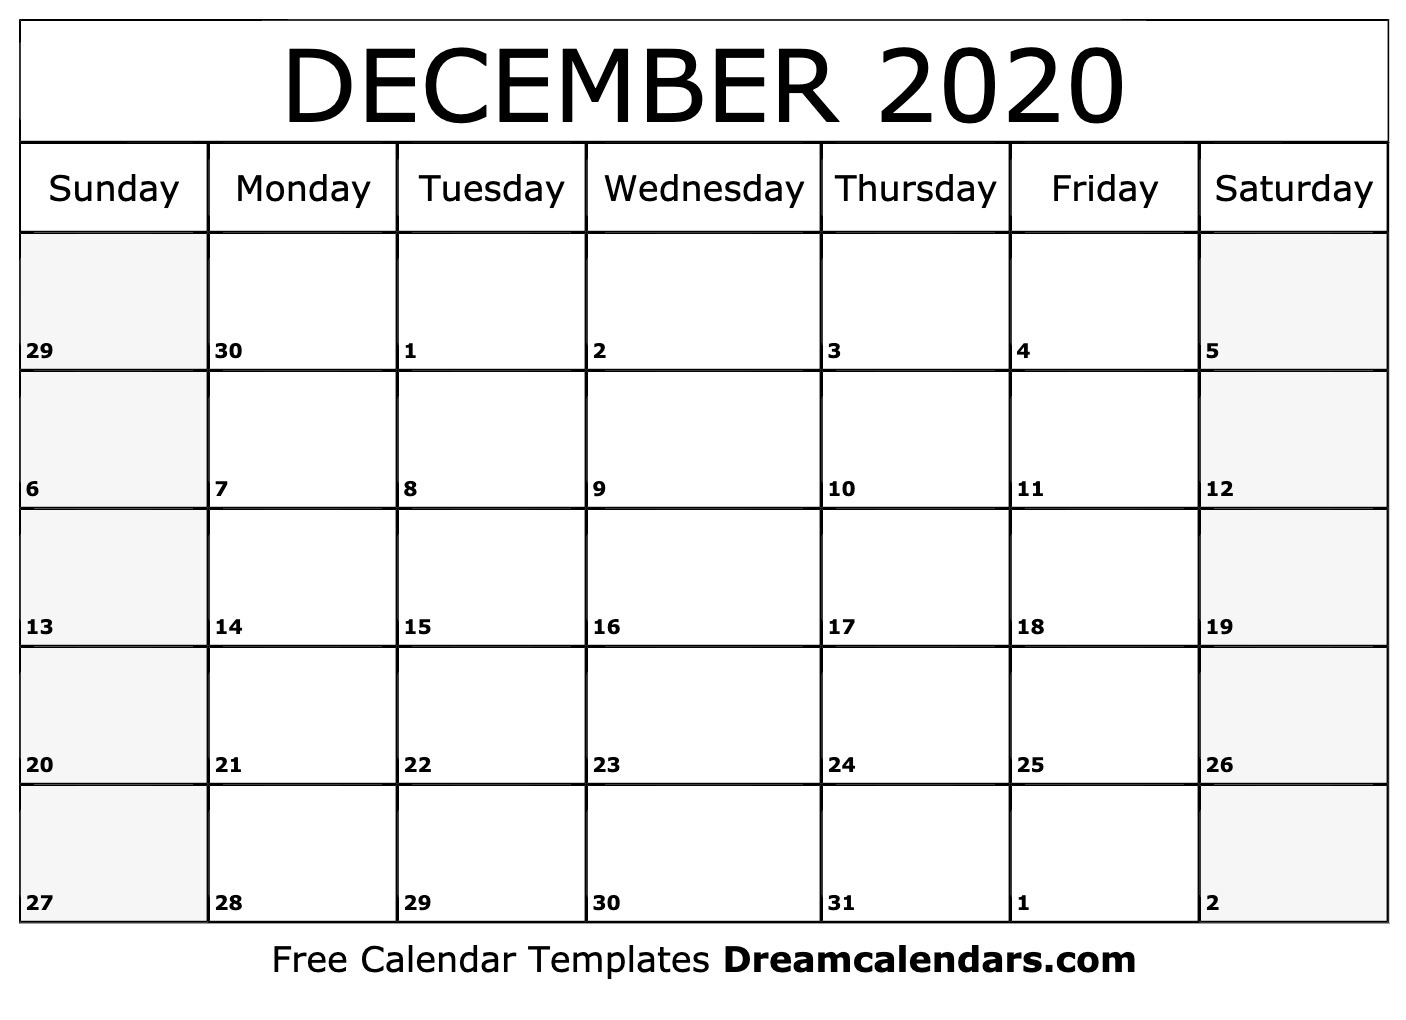 December 2020 Calendar Free Blank Printable With Holidays